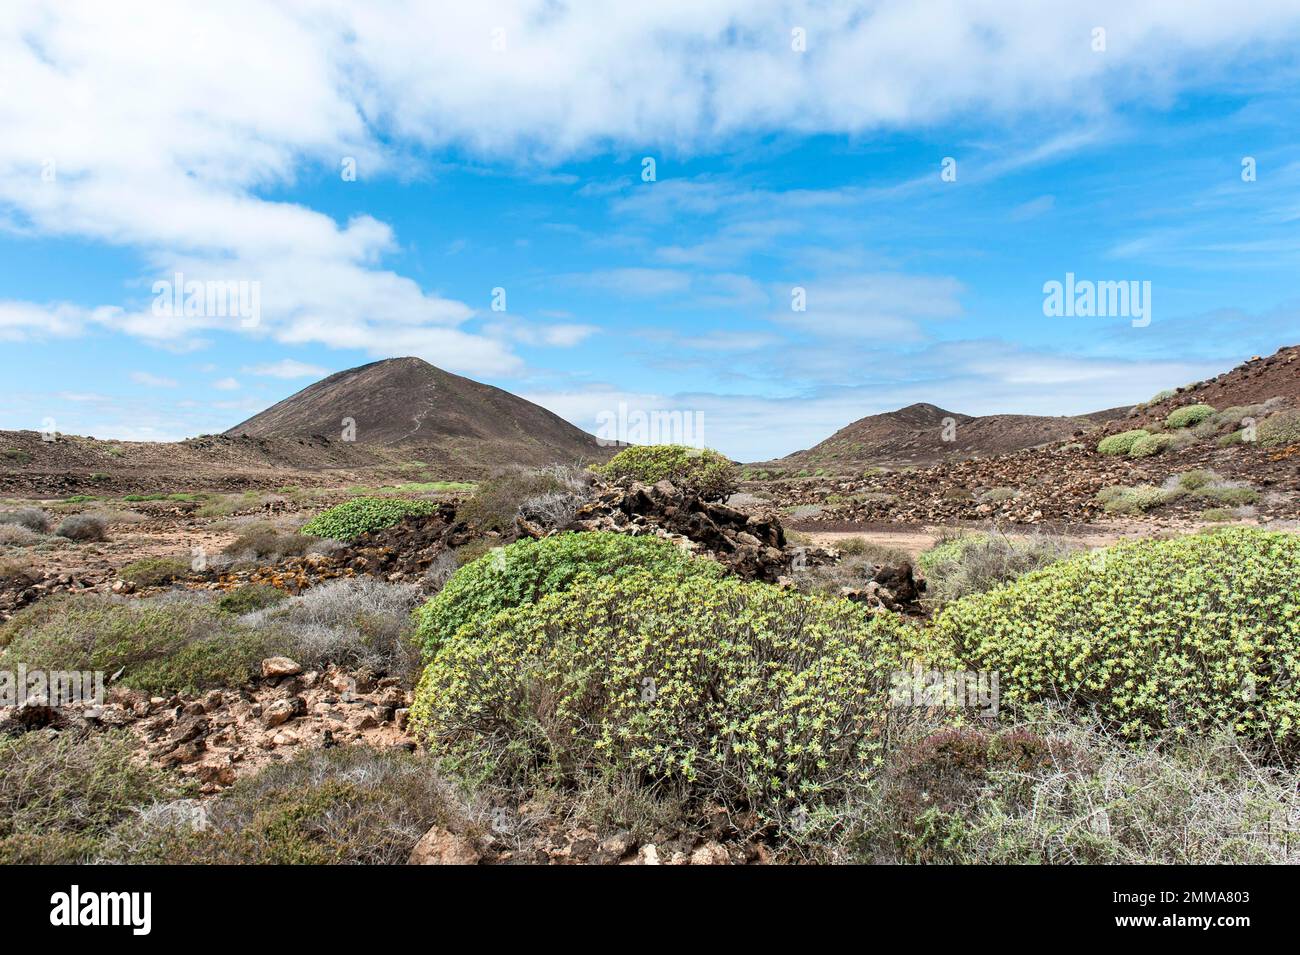 Barren plant growth on the volcanic island, balsam spurge (Euphorbia balsamifera), in the back left volcano Montana La Caldera, Islote de Lobos Stock Photo